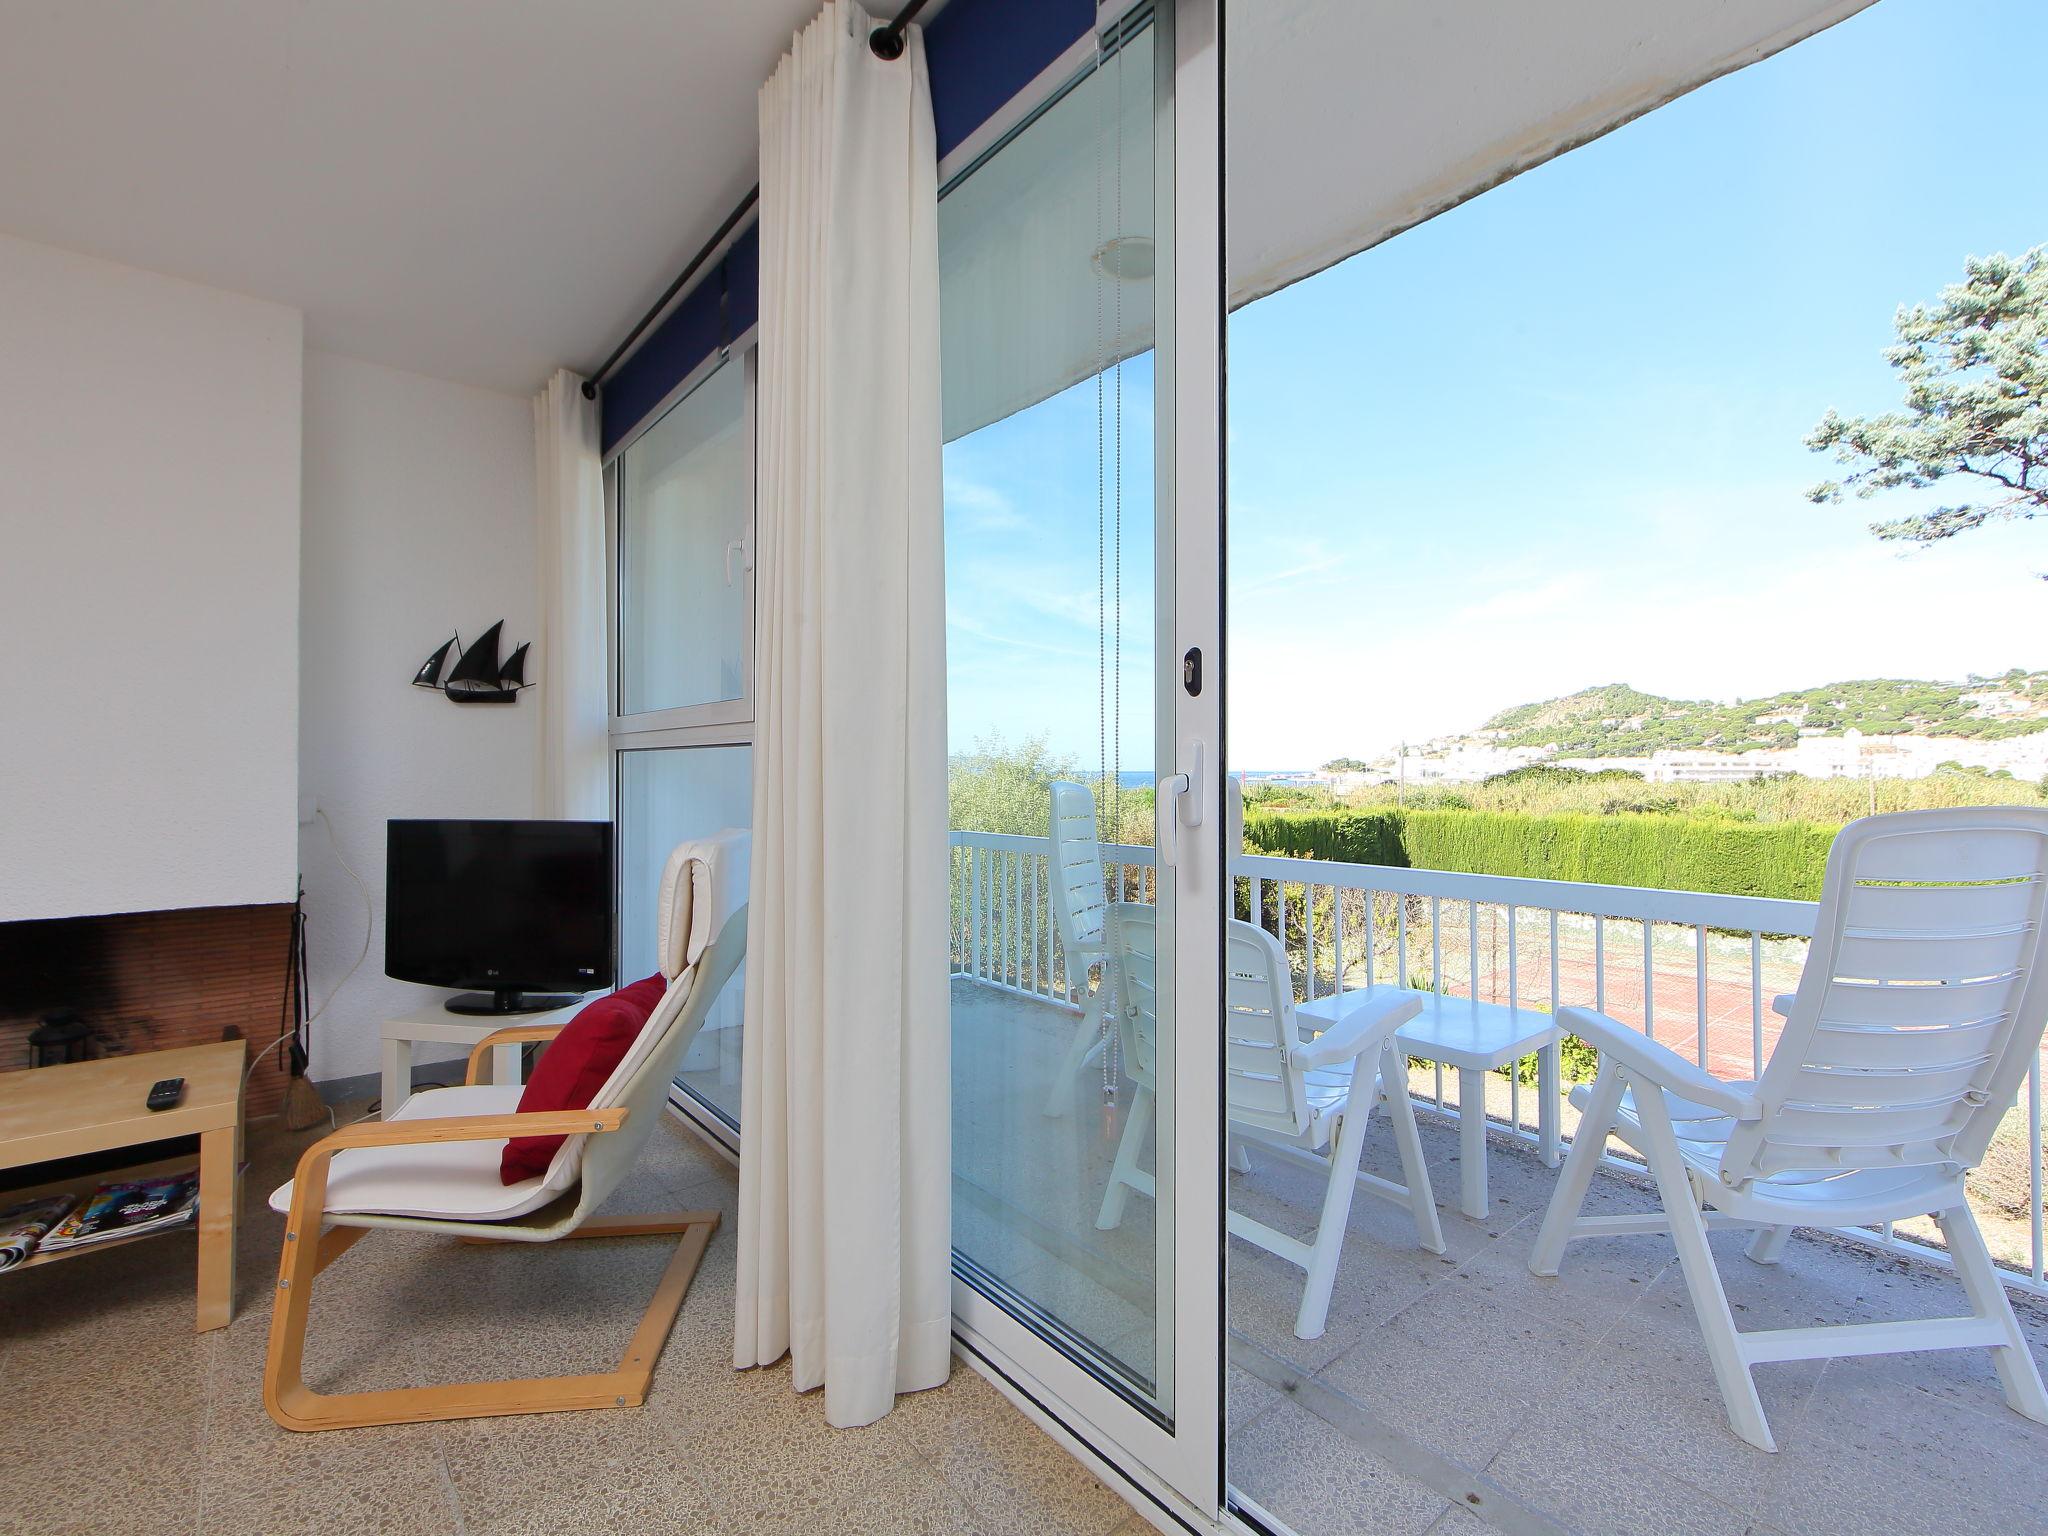 Photo 7 - Appartement de 2 chambres à El Port de la Selva avec terrasse et vues à la mer